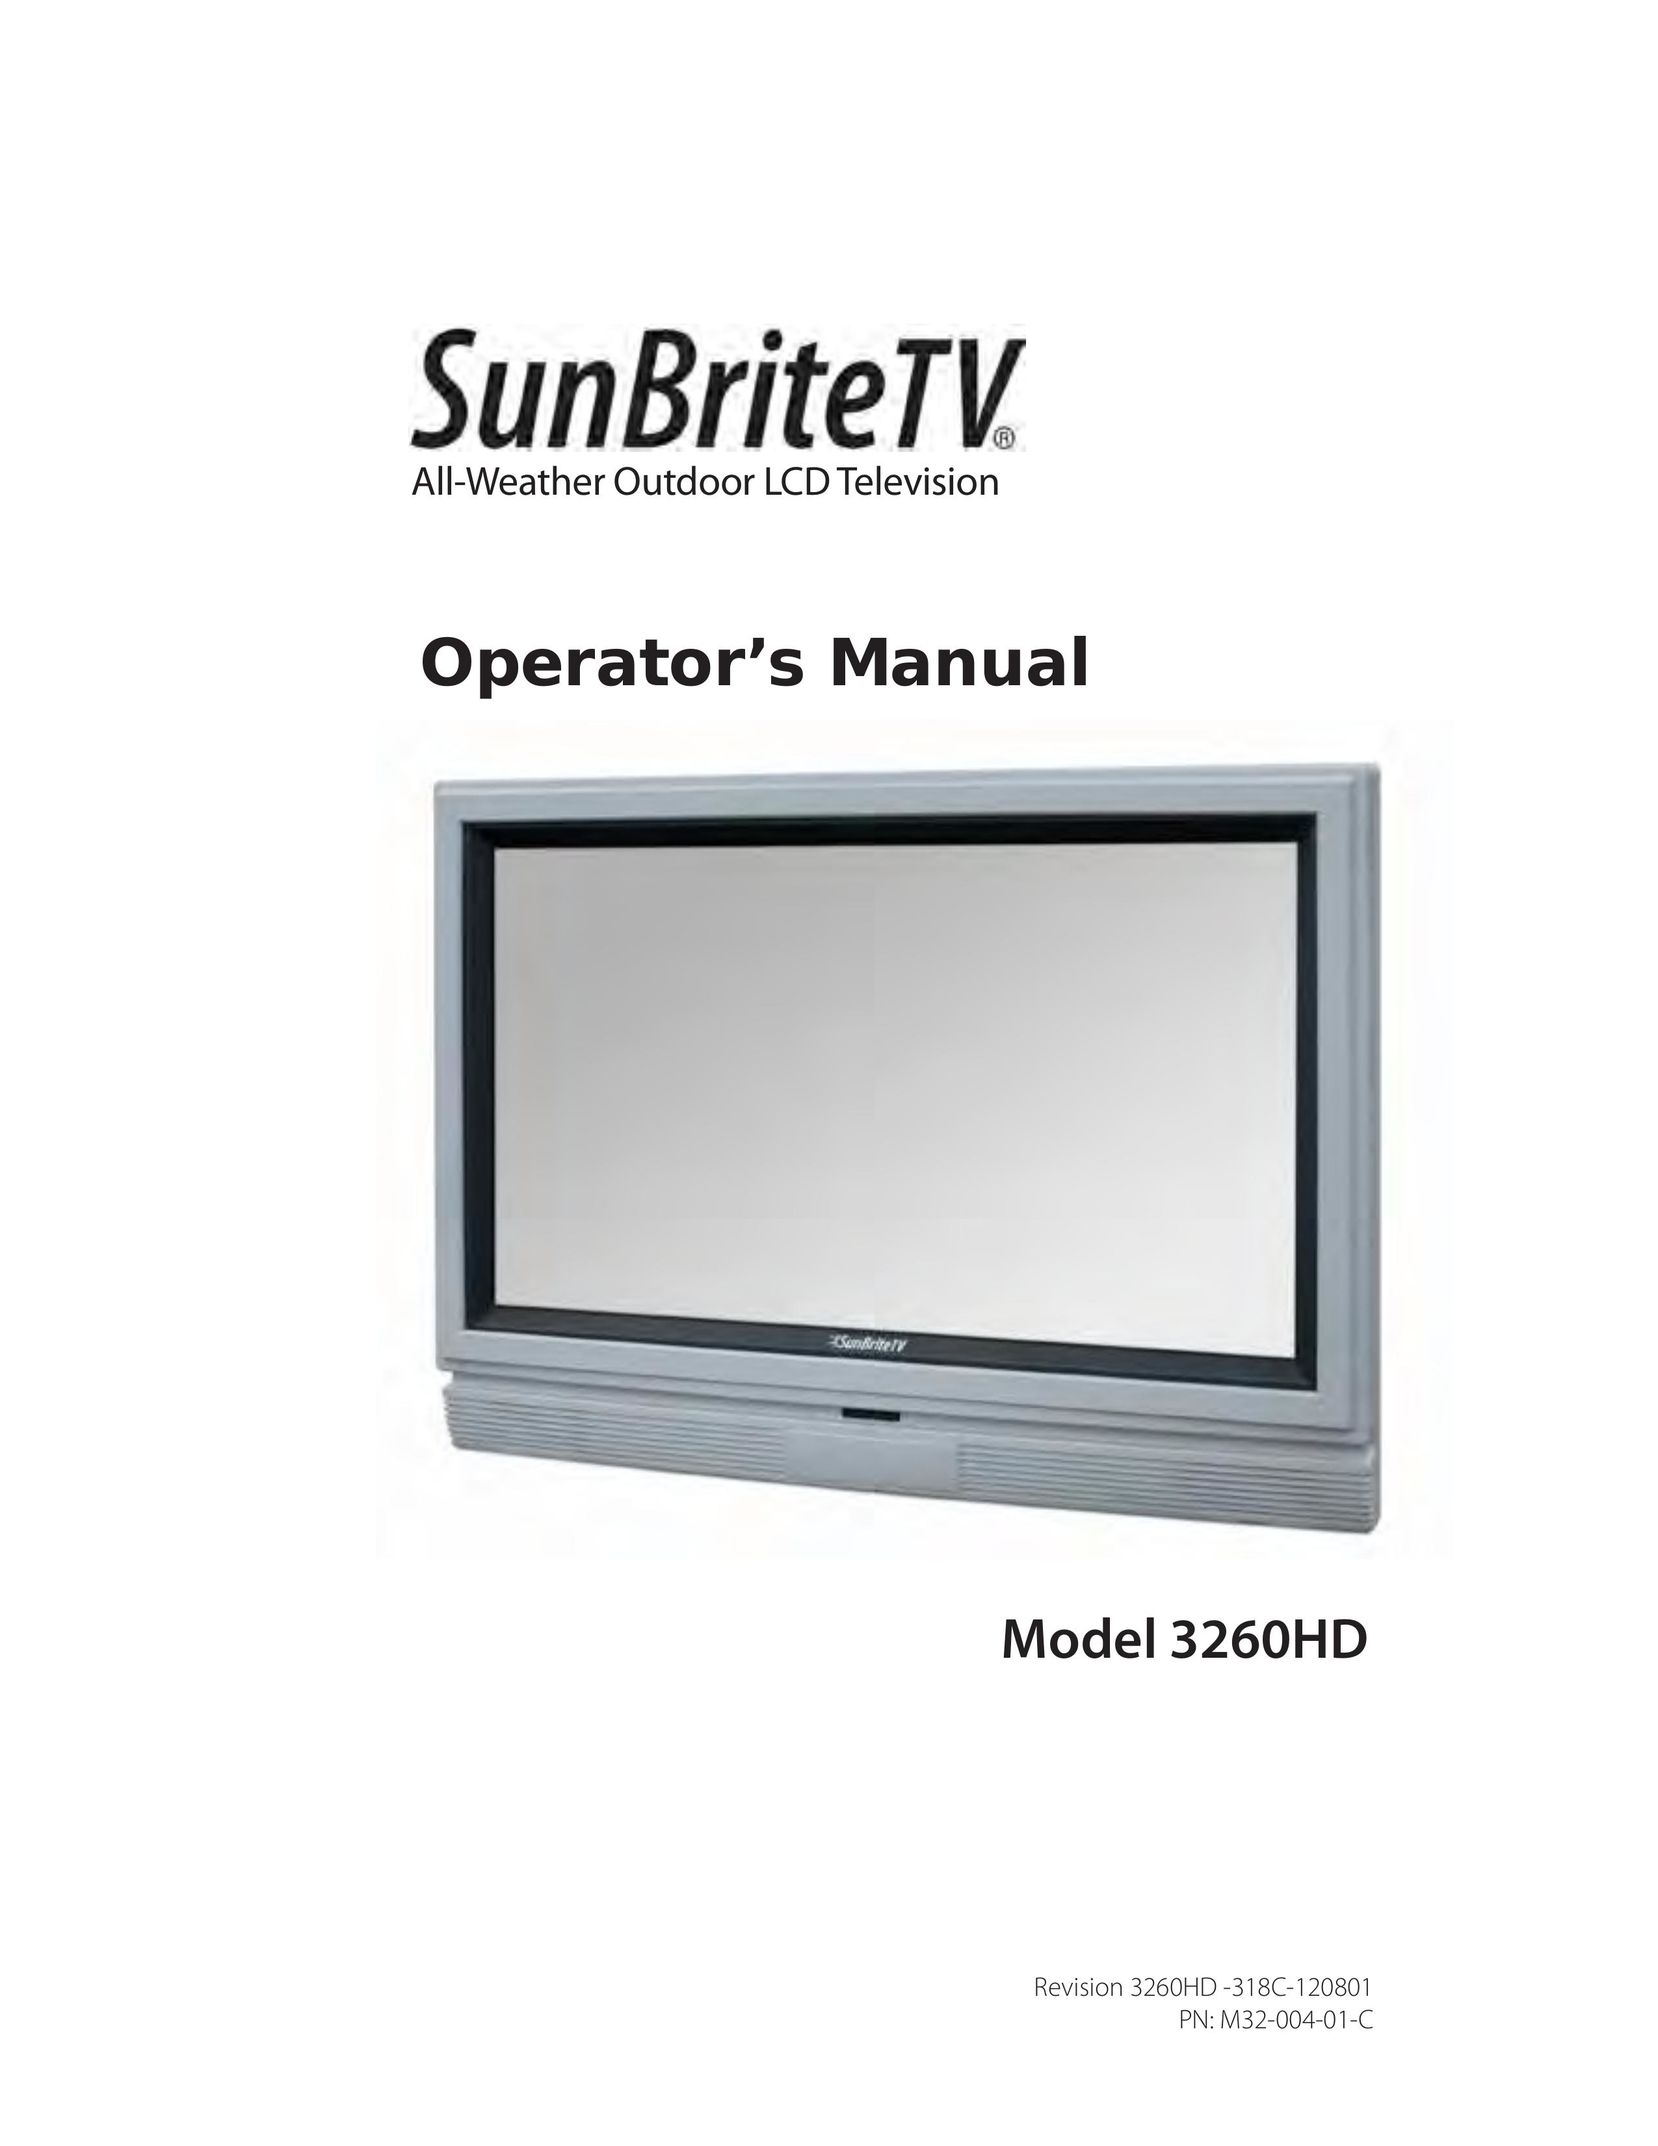 SunBriteTV SB-3260HD-SL Flat Panel Television User Manual